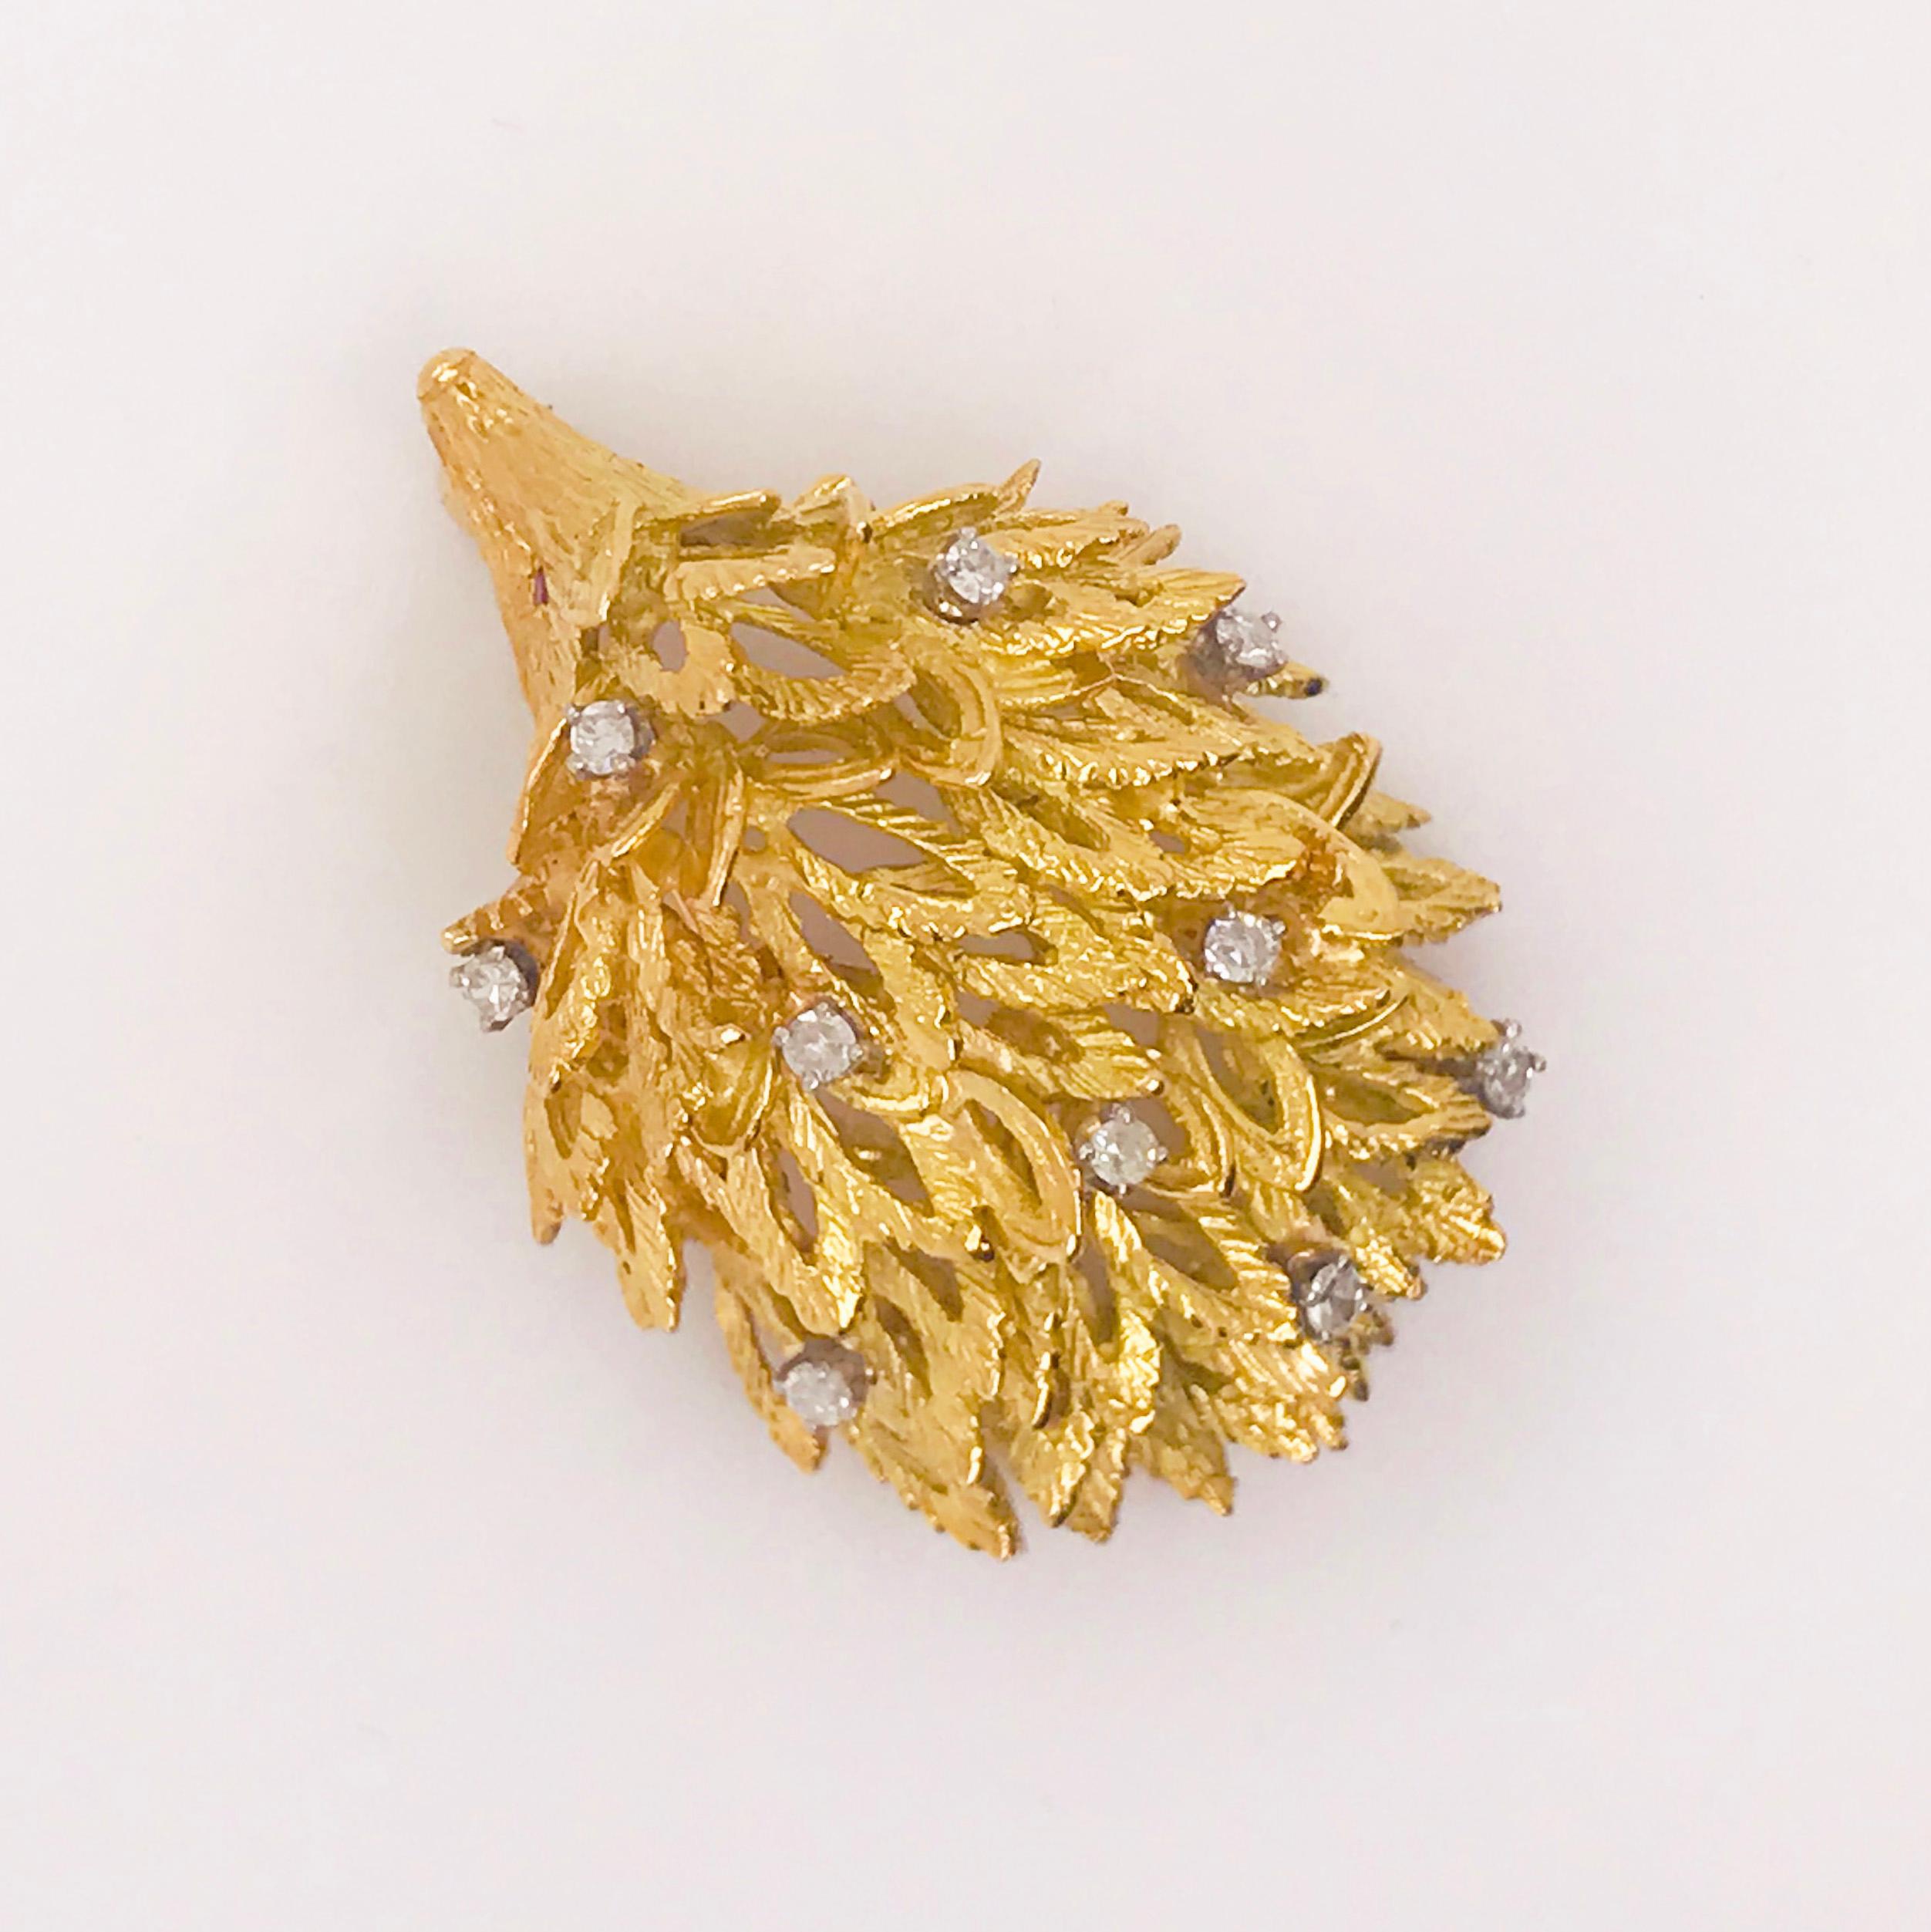 Women's Gemstone Porcupine Brooch, 0.25 Diamond and Ruby, Pin, 14 Karat Gold XL Size